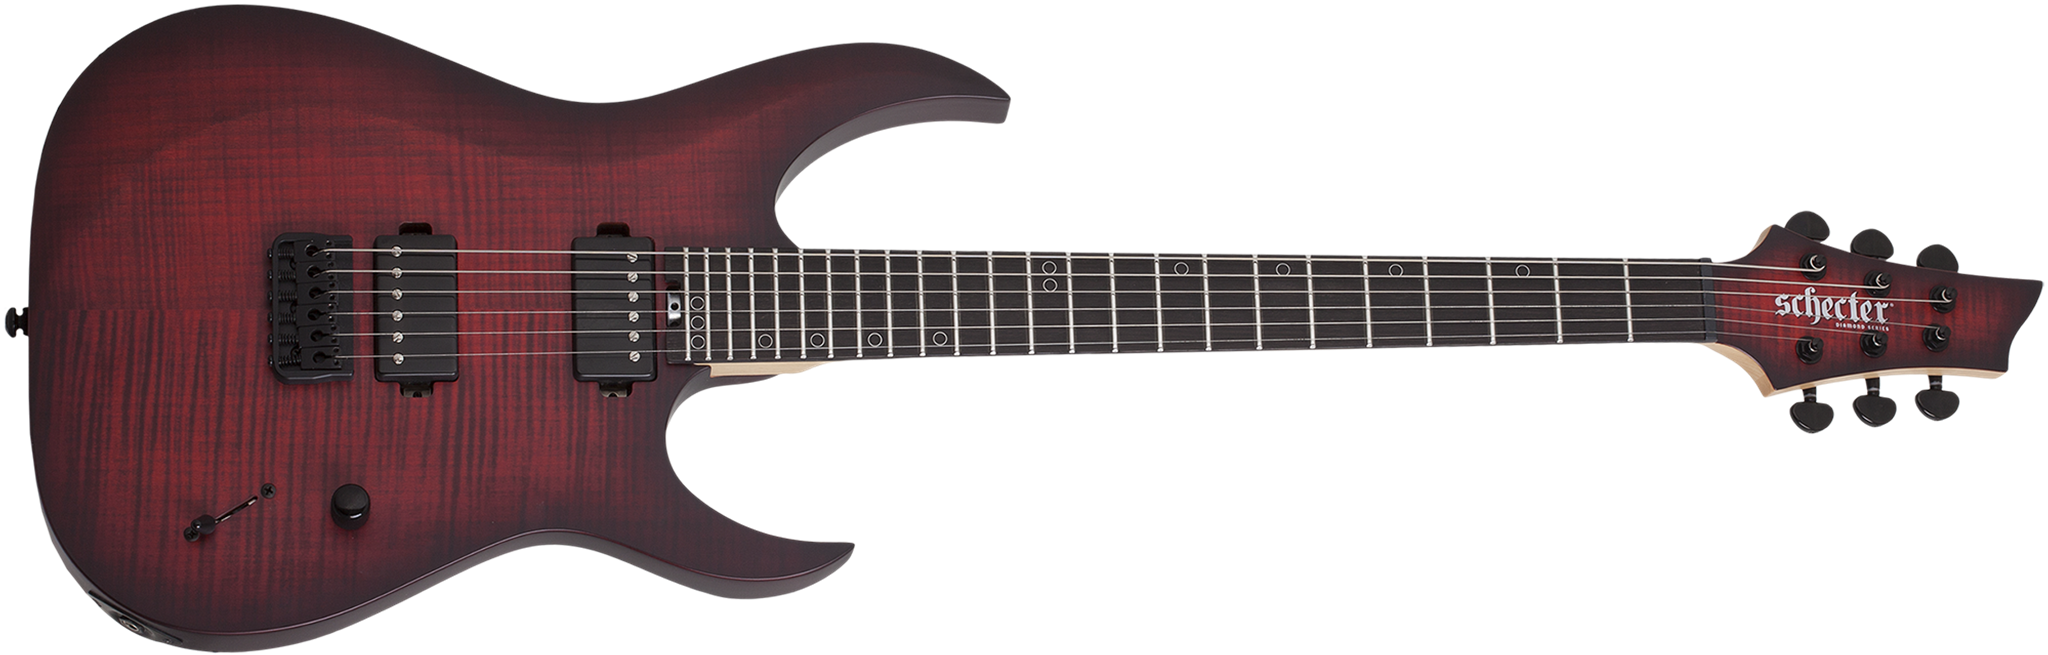 Schecter DIAMOND SERIES Sunset-6 Extreme Scarlet Burst  6-String Electric Guitar